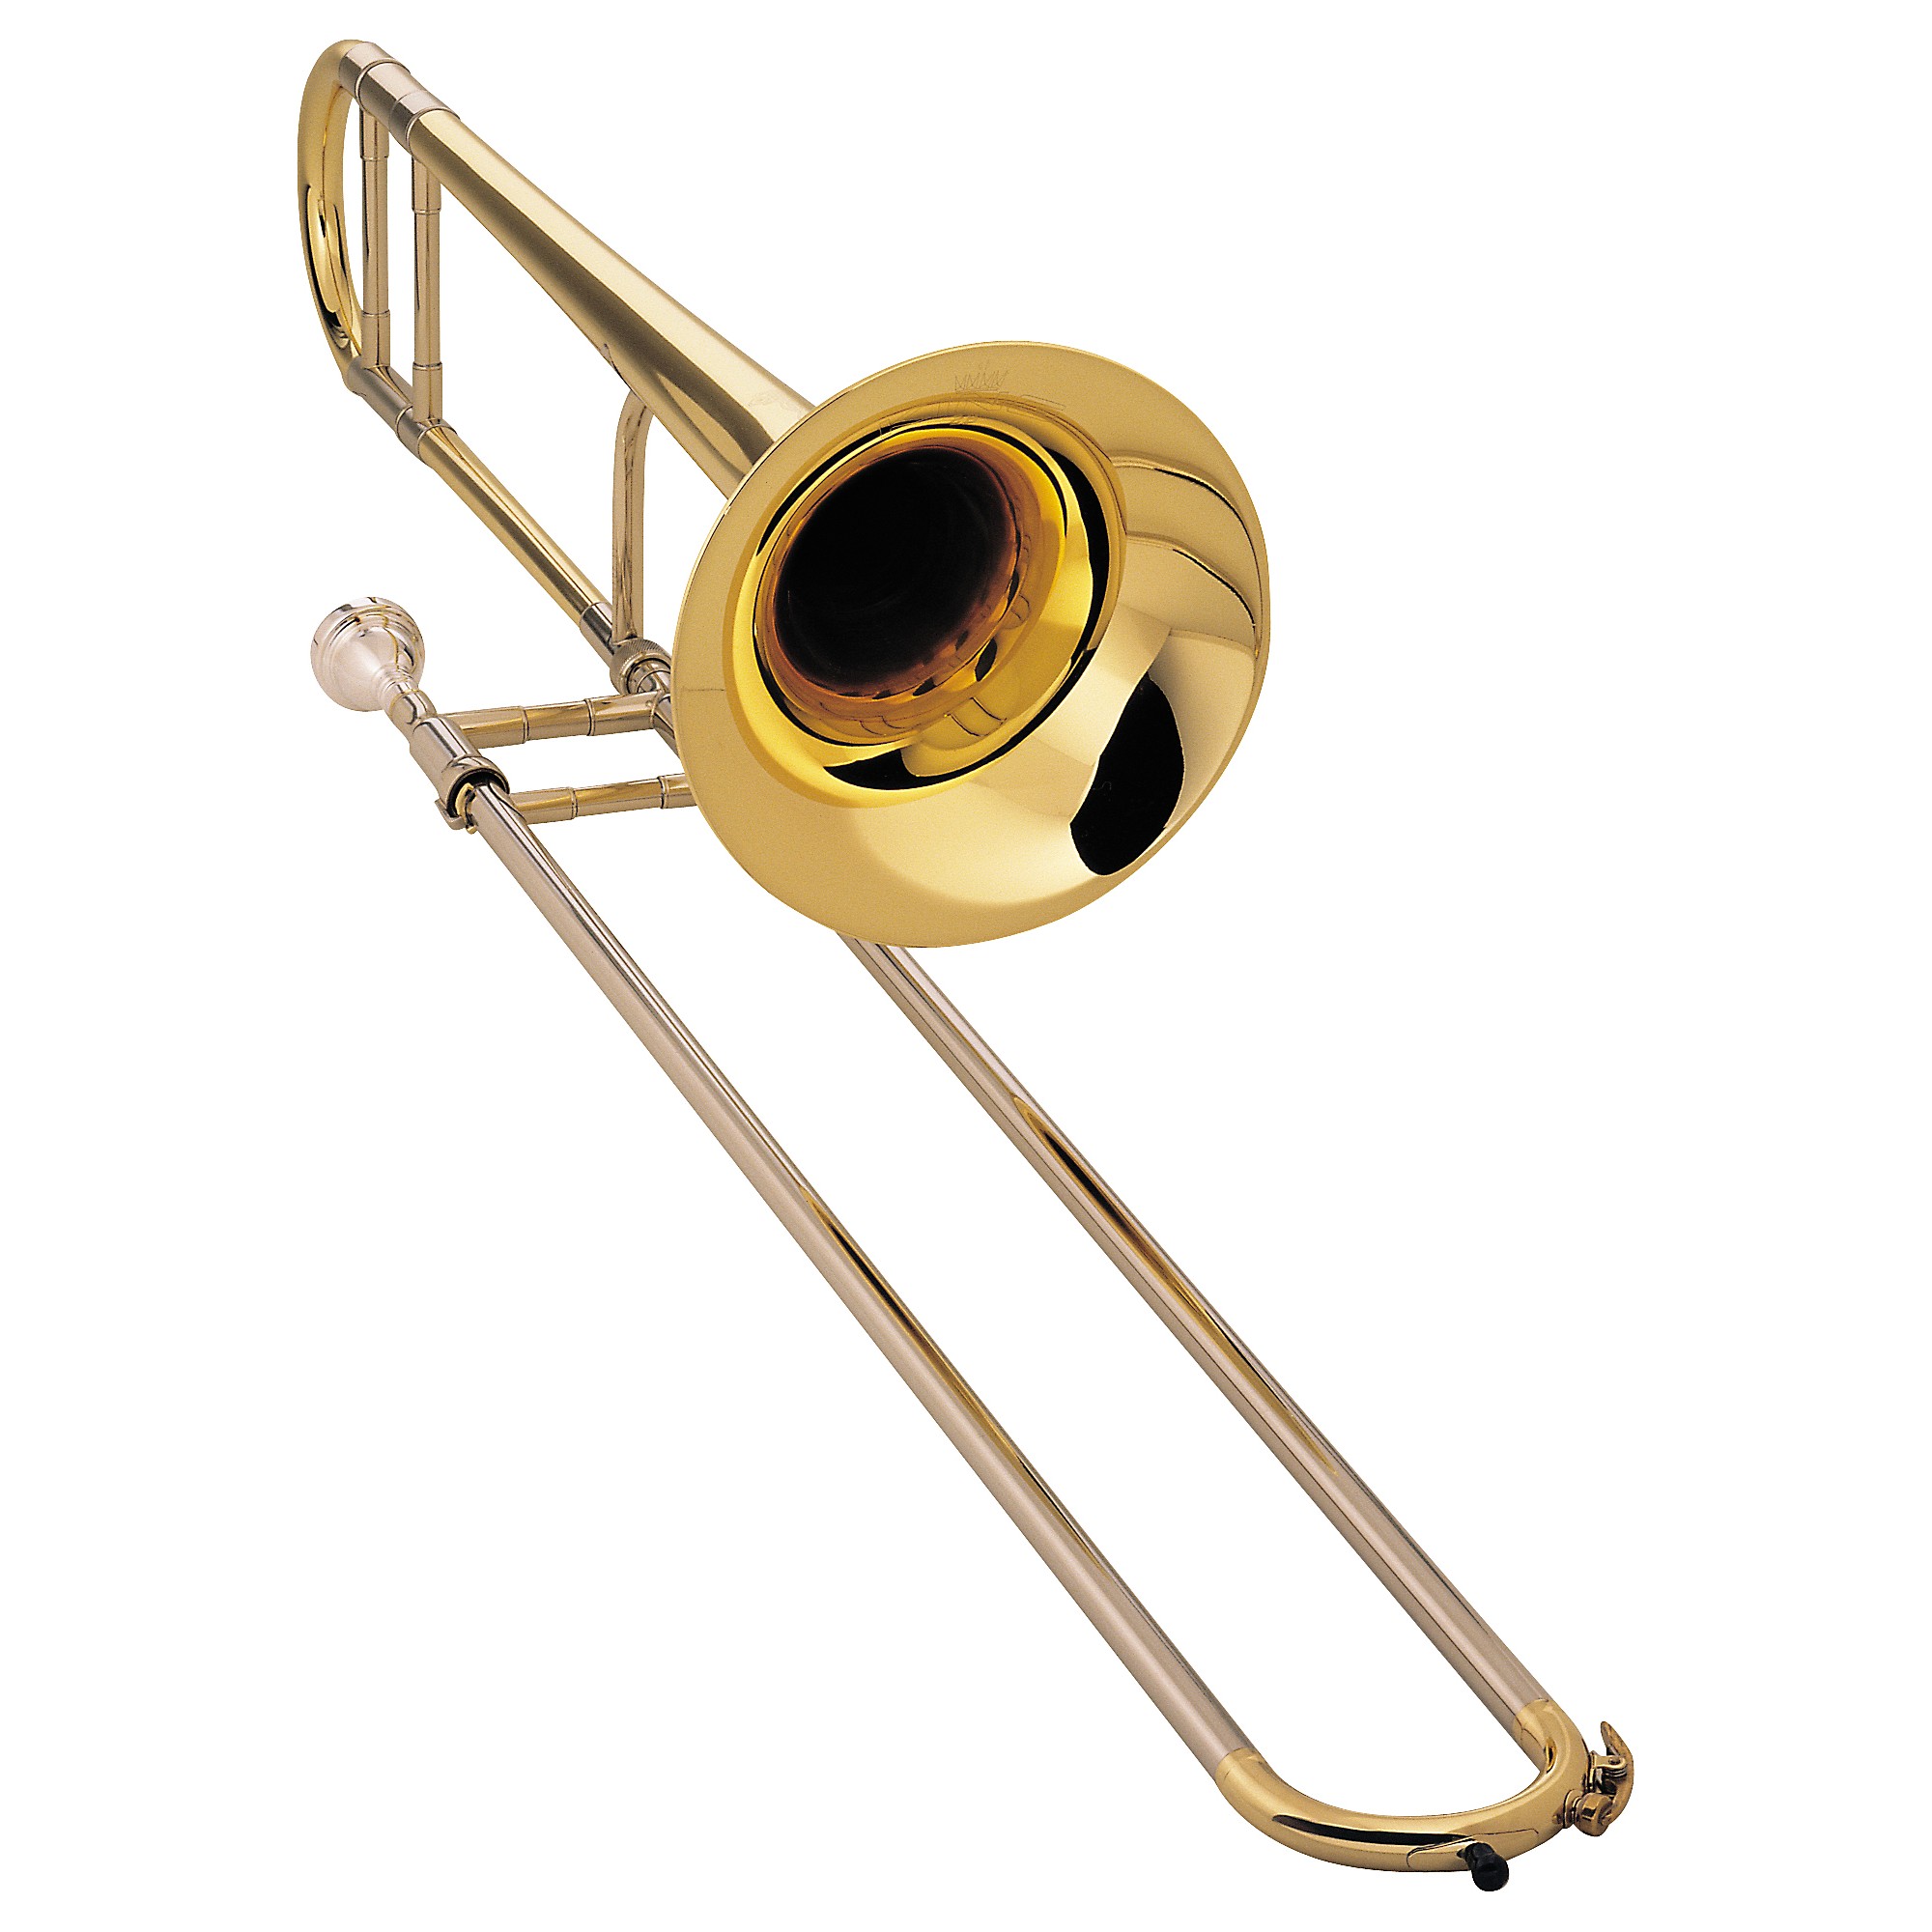 King 2102 Legend 2B Series Professional Trombone 2102L with Short